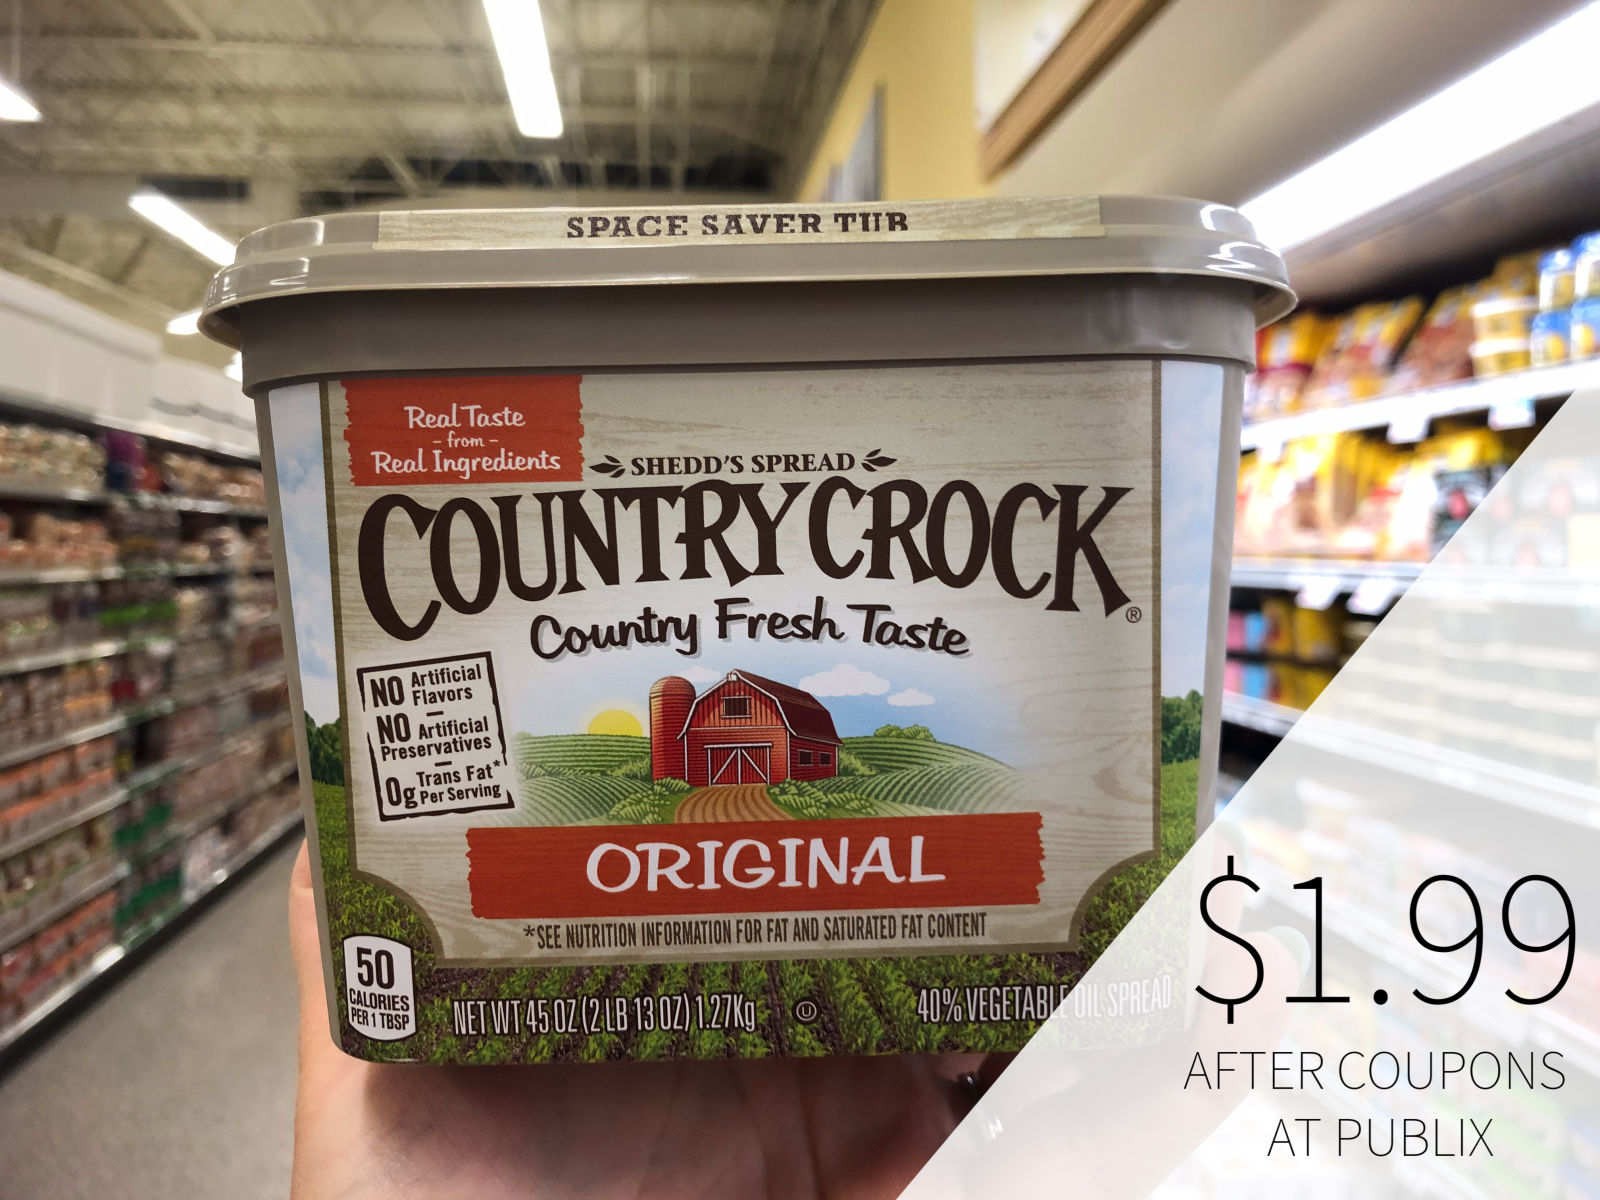 Big Savings On Country Crock Spread At Publix – Big Tub Less Than Half Price!